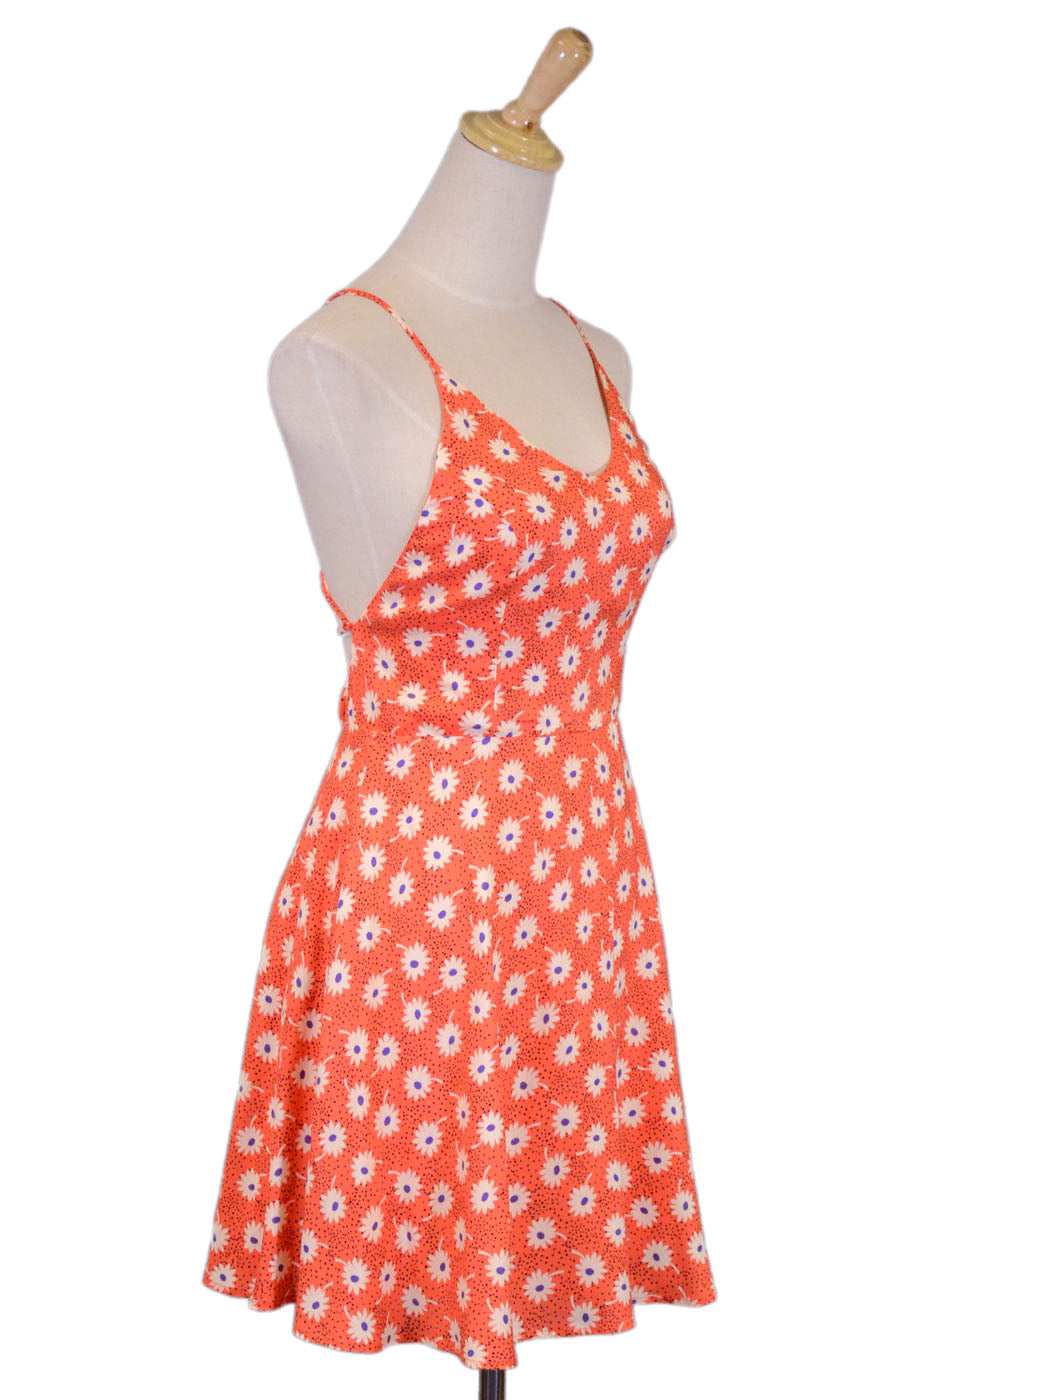 Lush Orange Daisy Floral Printed Spaghetti Strap Bare Back Flare Girly Dress - ALILANG.COM